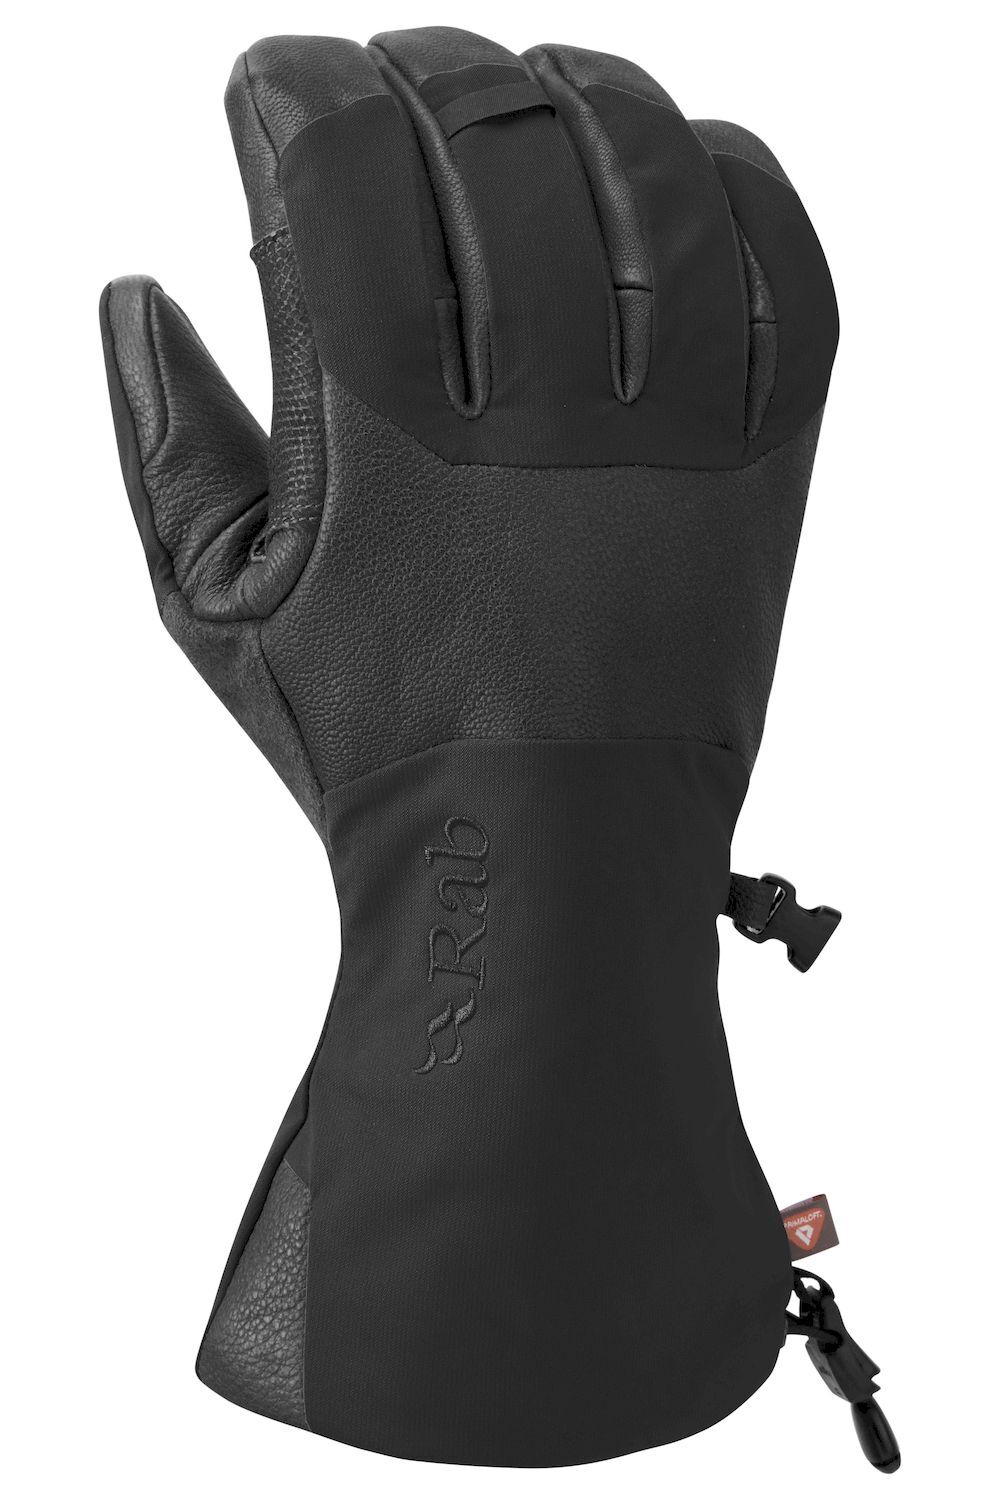 Rab Guide 2 GTX Gloves - Gloves